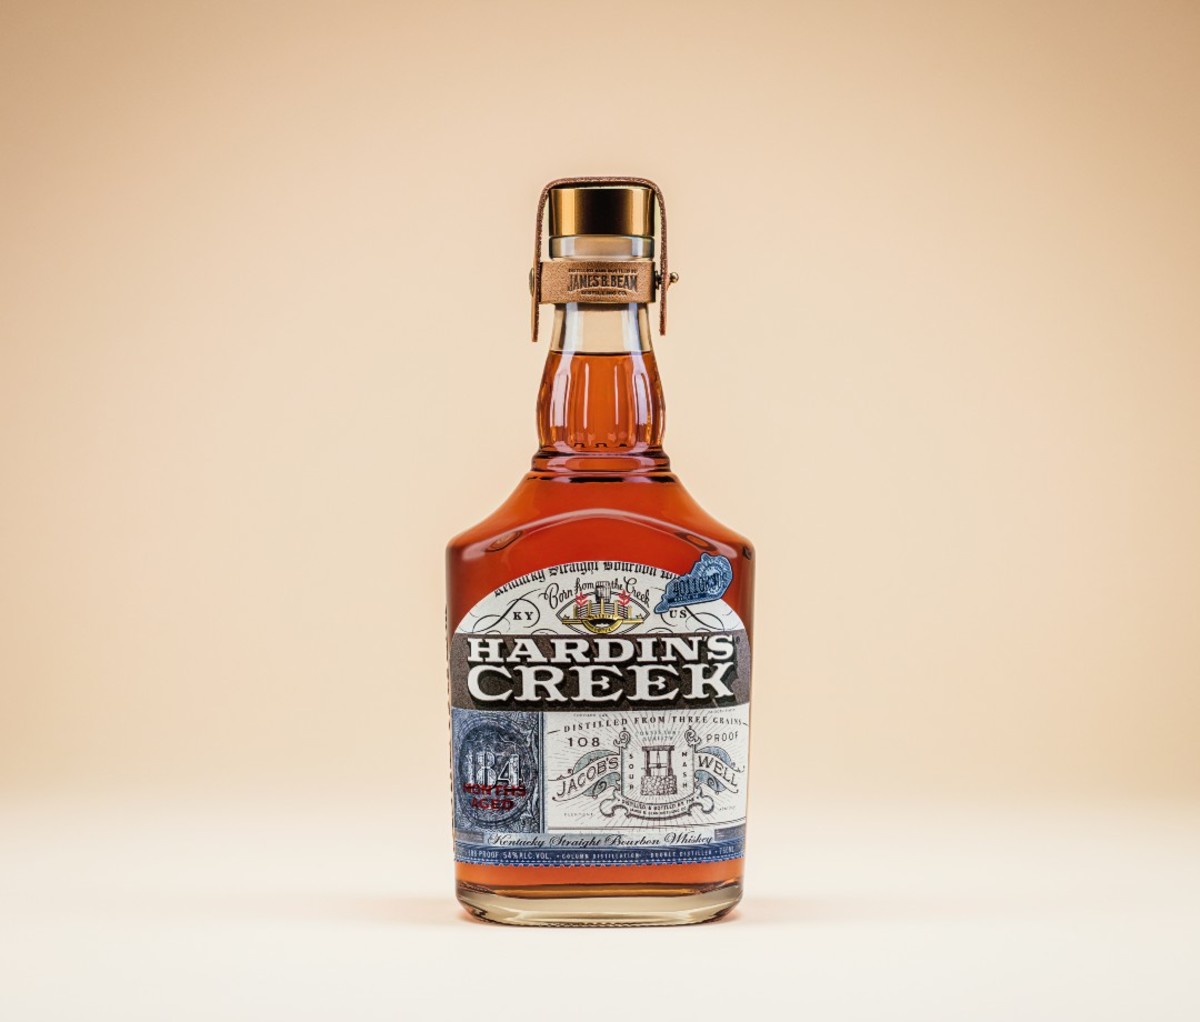 Bottle of Jacob’s Well Kentucky Straight Bourbon on soft orange backdrop